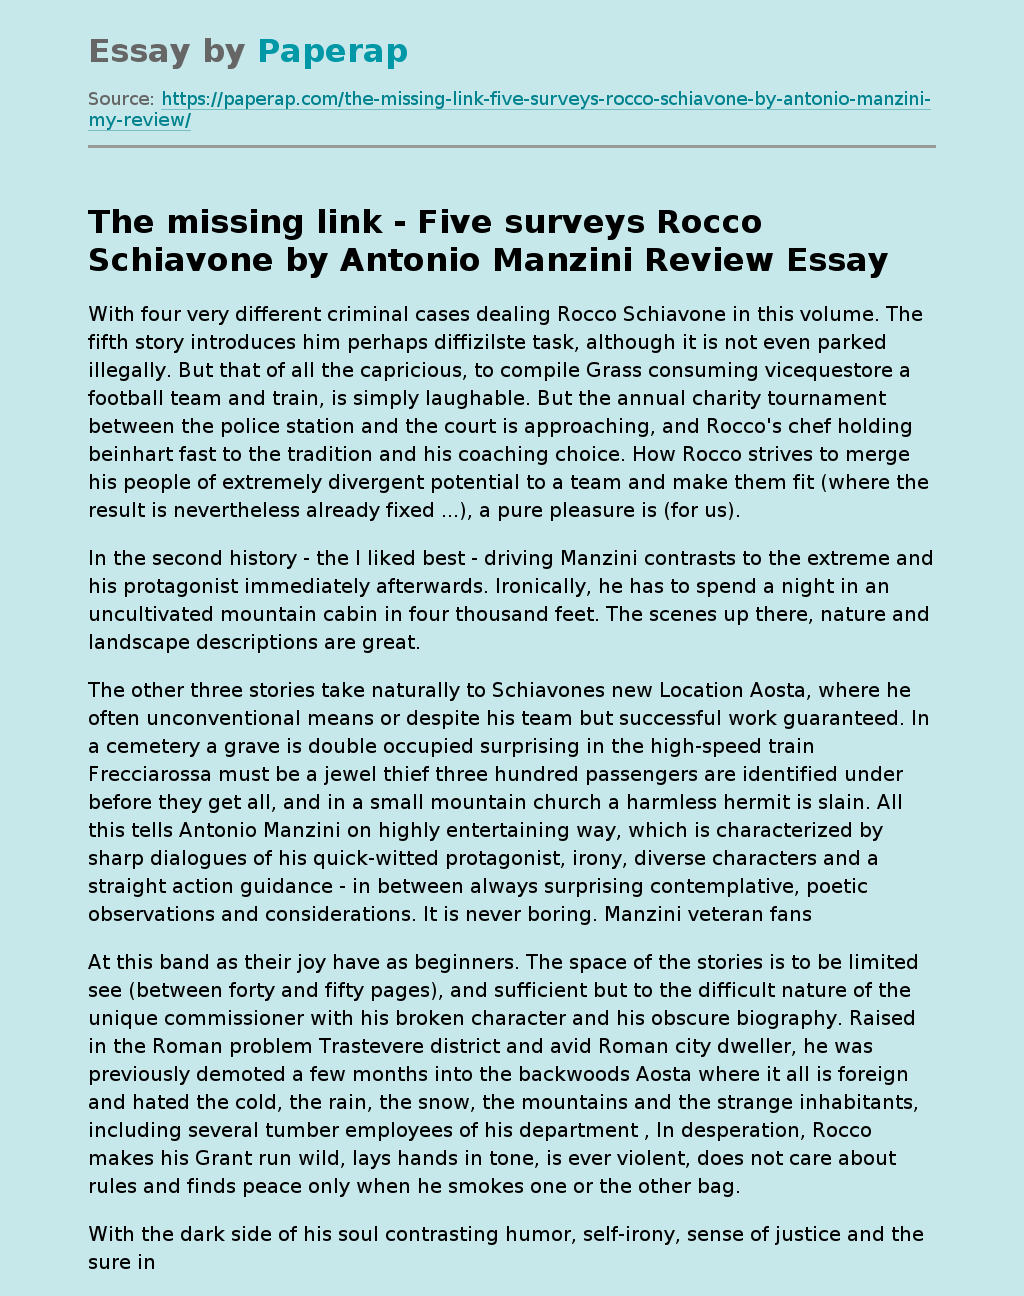 The missing link - Five surveys Rocco Schiavone by Antonio Manzini  Review